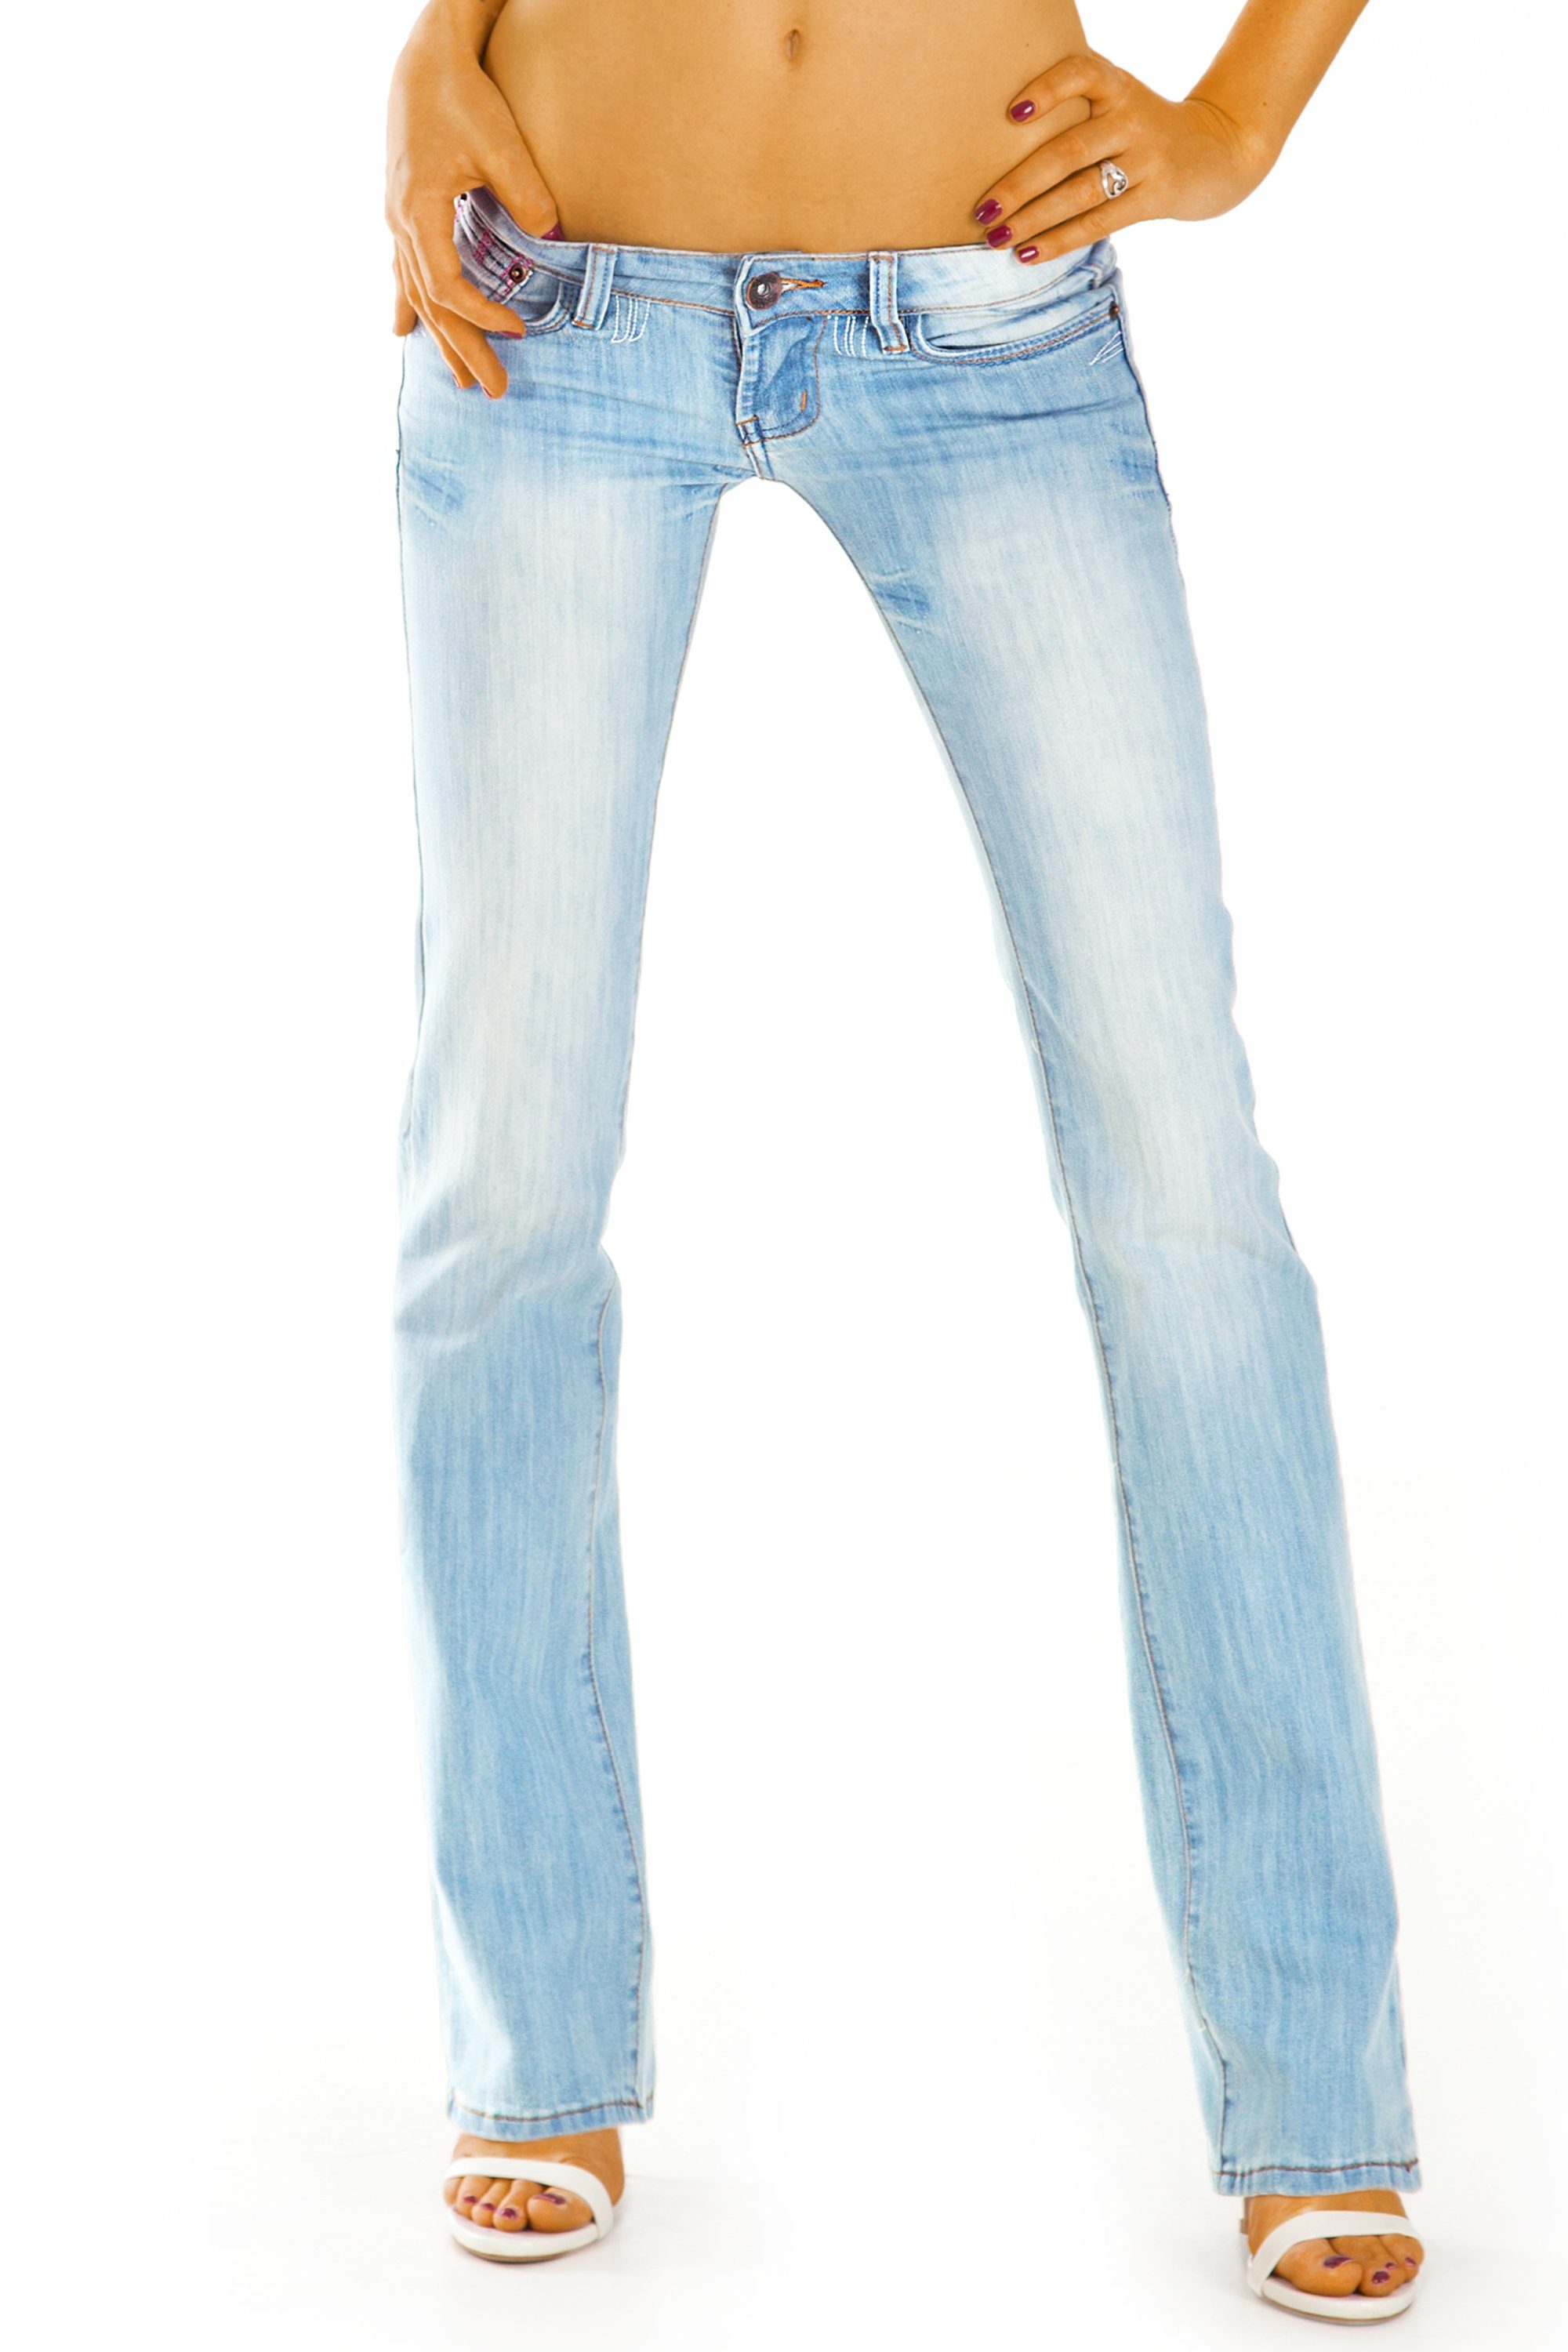 be styled Bootcut-Jeans »Damen Hüftjeans extrem tiefer Leibhöhe - Bootcut  Jeanshose - j37a-1« sehr niedrige Leibhöhe, mit Stretch-Anteil,  5-pOcket-Style online kaufen | OTTO